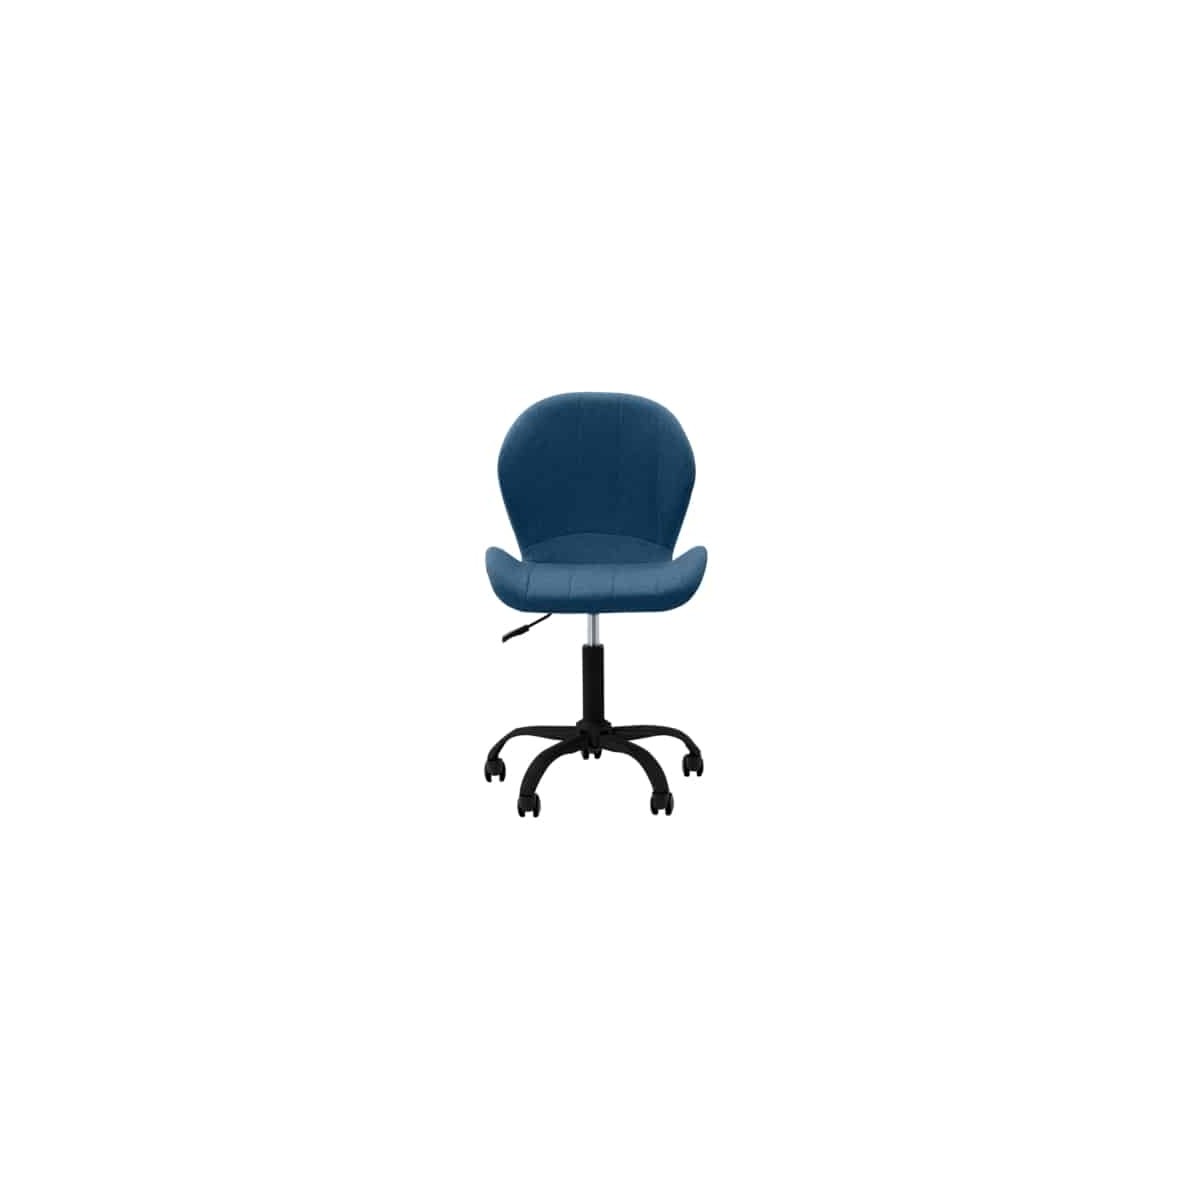 Ga op pad Kapel haak Fabric office chair with black legs BEVERLY (Petrol blue)